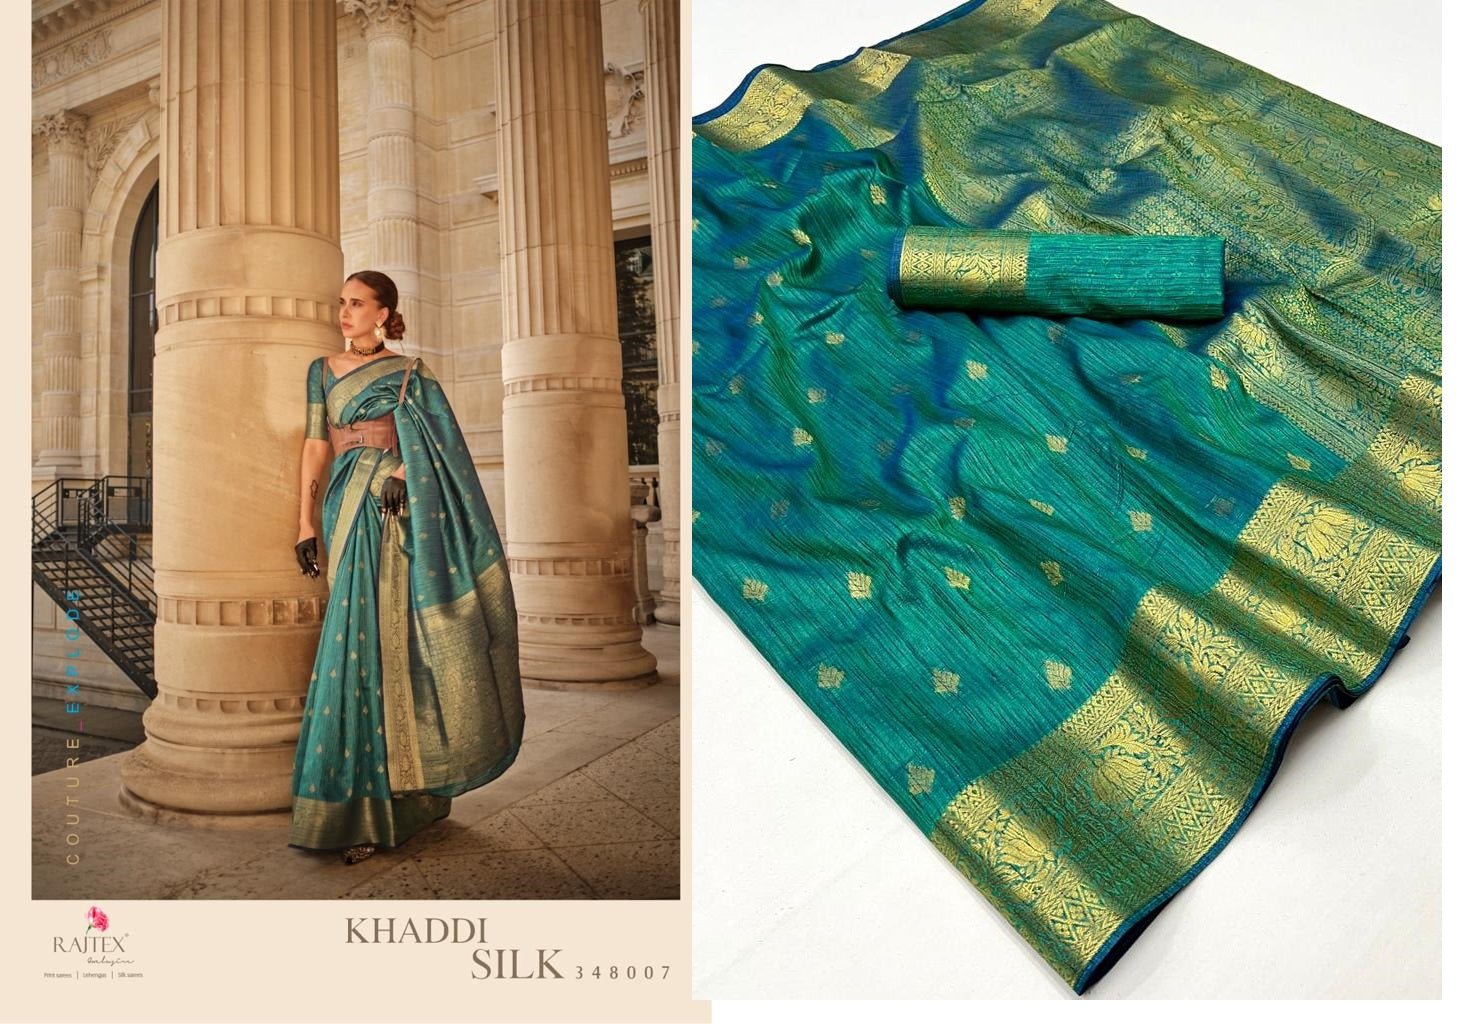 Khaddi Silk Rajtex Handloom Weaving Sarees